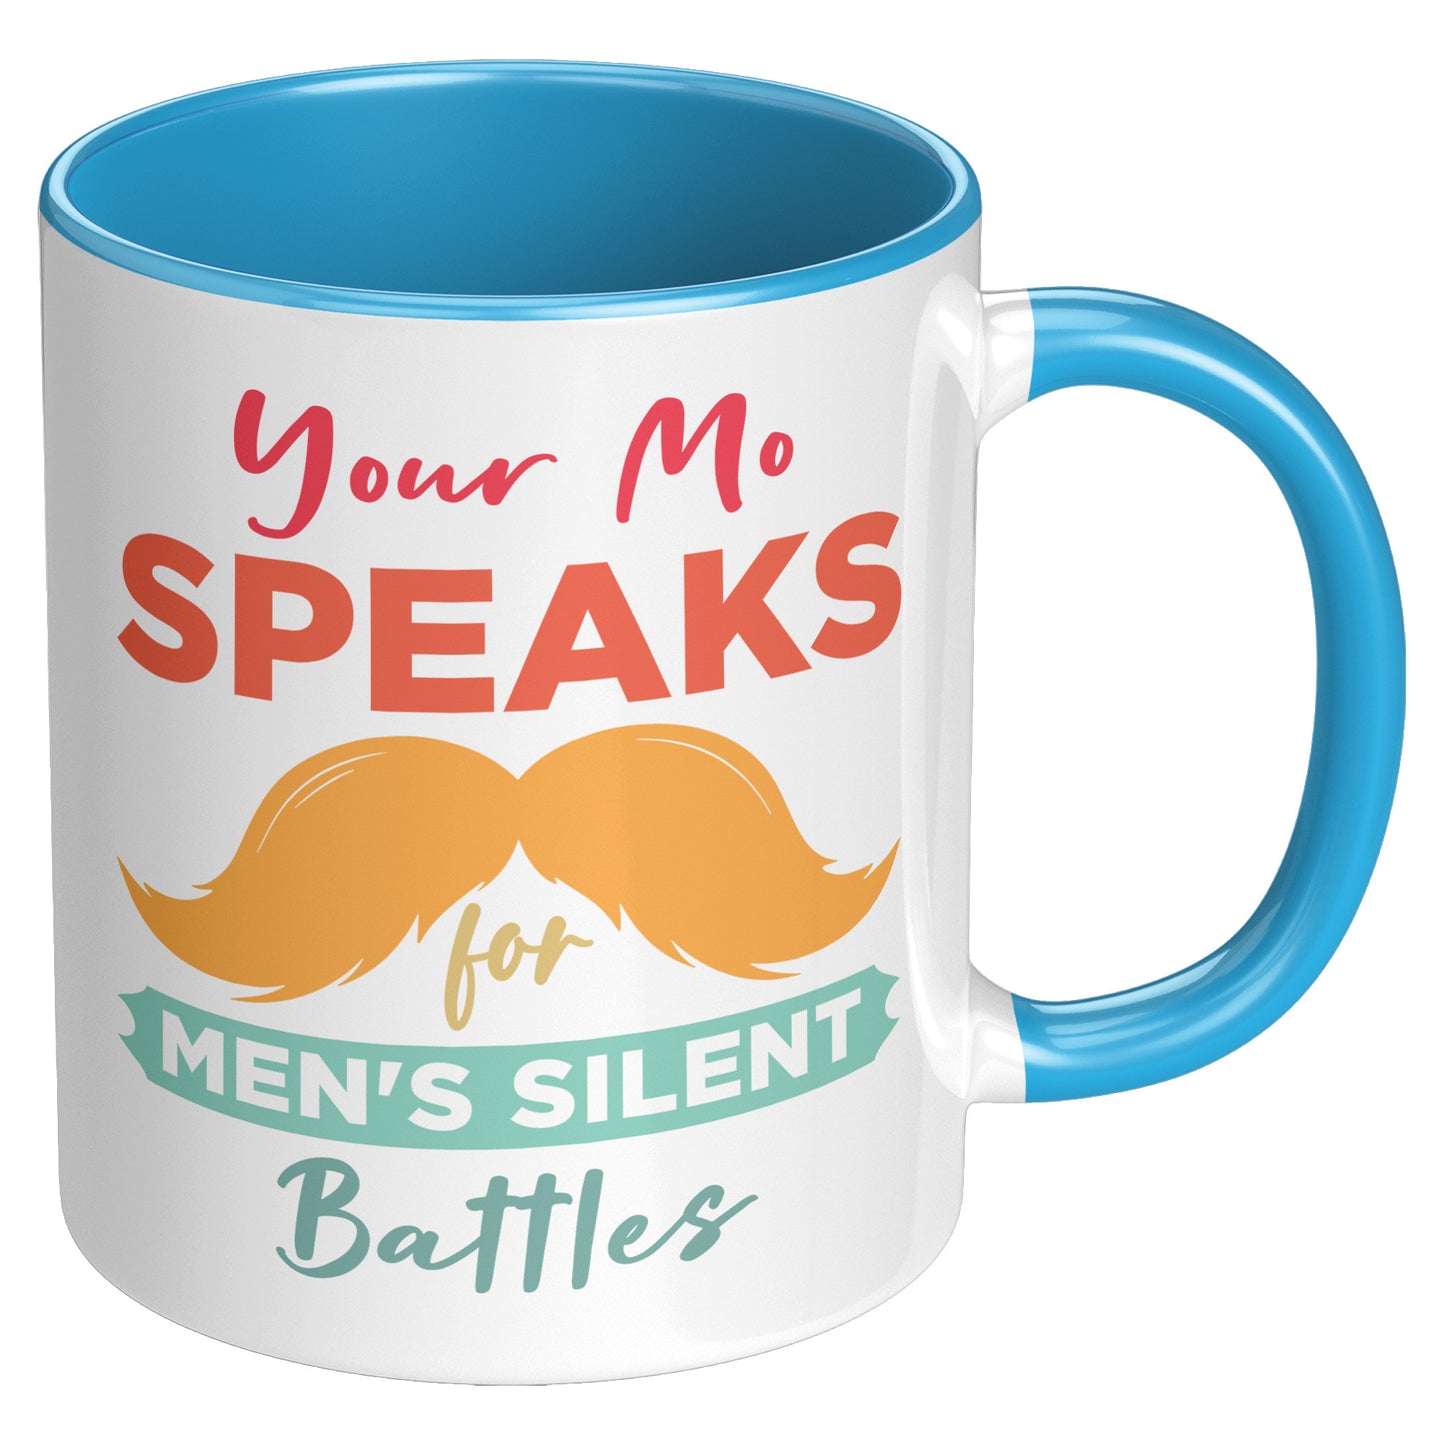 11oz Accent Mug Movember Your Mo Speaks For Men's Silent Battles Both Side